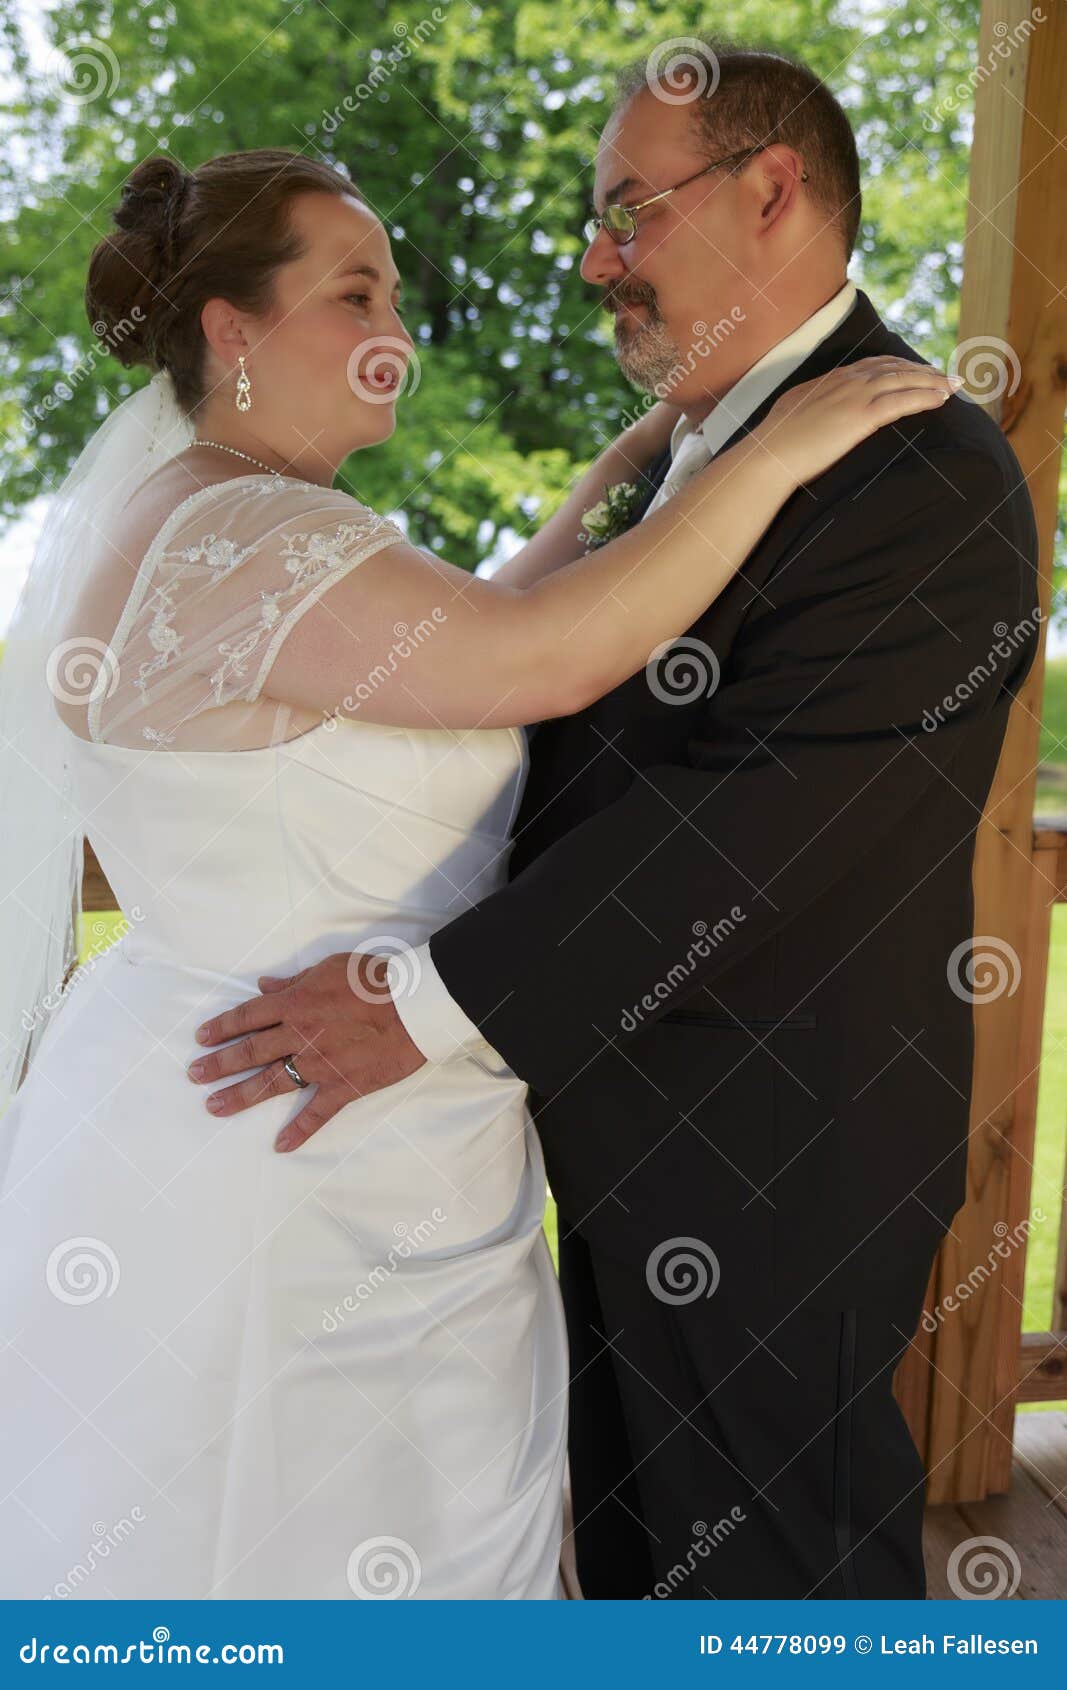 wedding couple pose average caucasian bride groom embrace their portait her hands his shoulders his hands 44778099